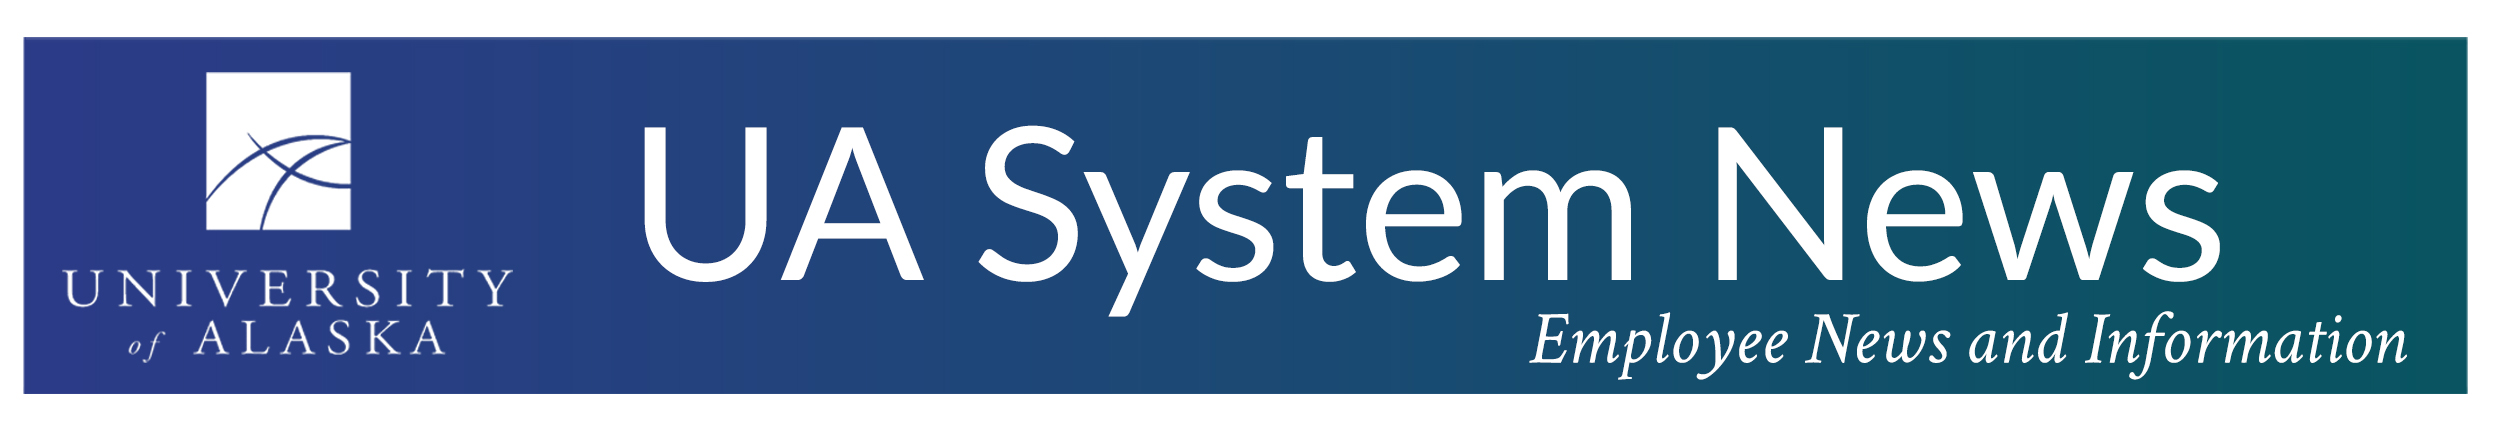 UA system news banner